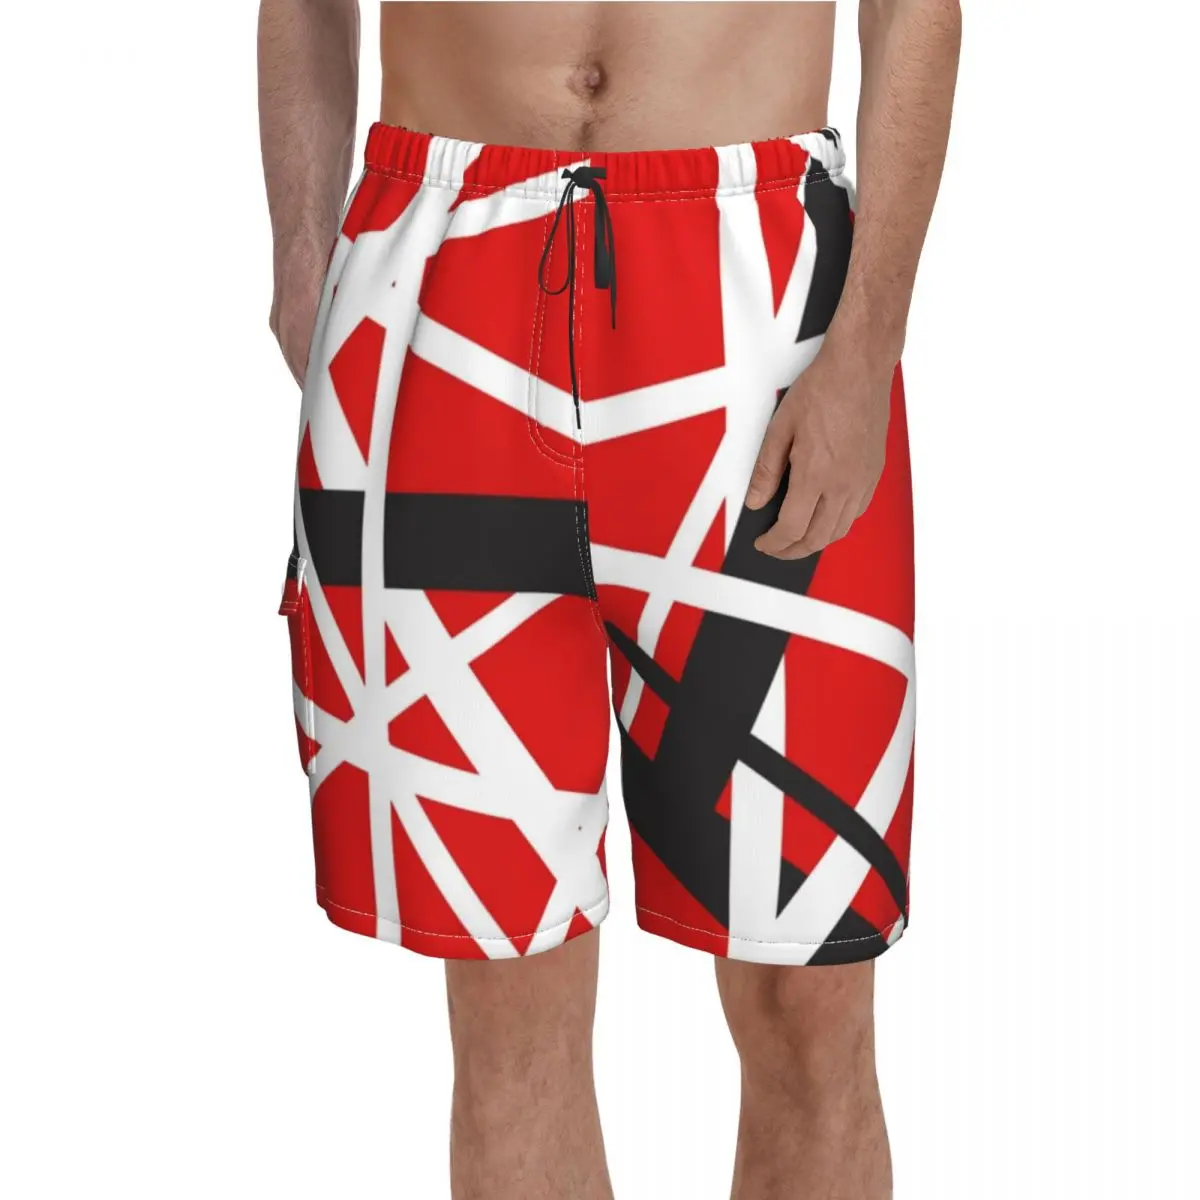 Van Halen Board Shorts EVH 5150 STRIPES Board Short Pants Trenky Men's Comfortable Design Swimming Trunks Plus Size 2XL